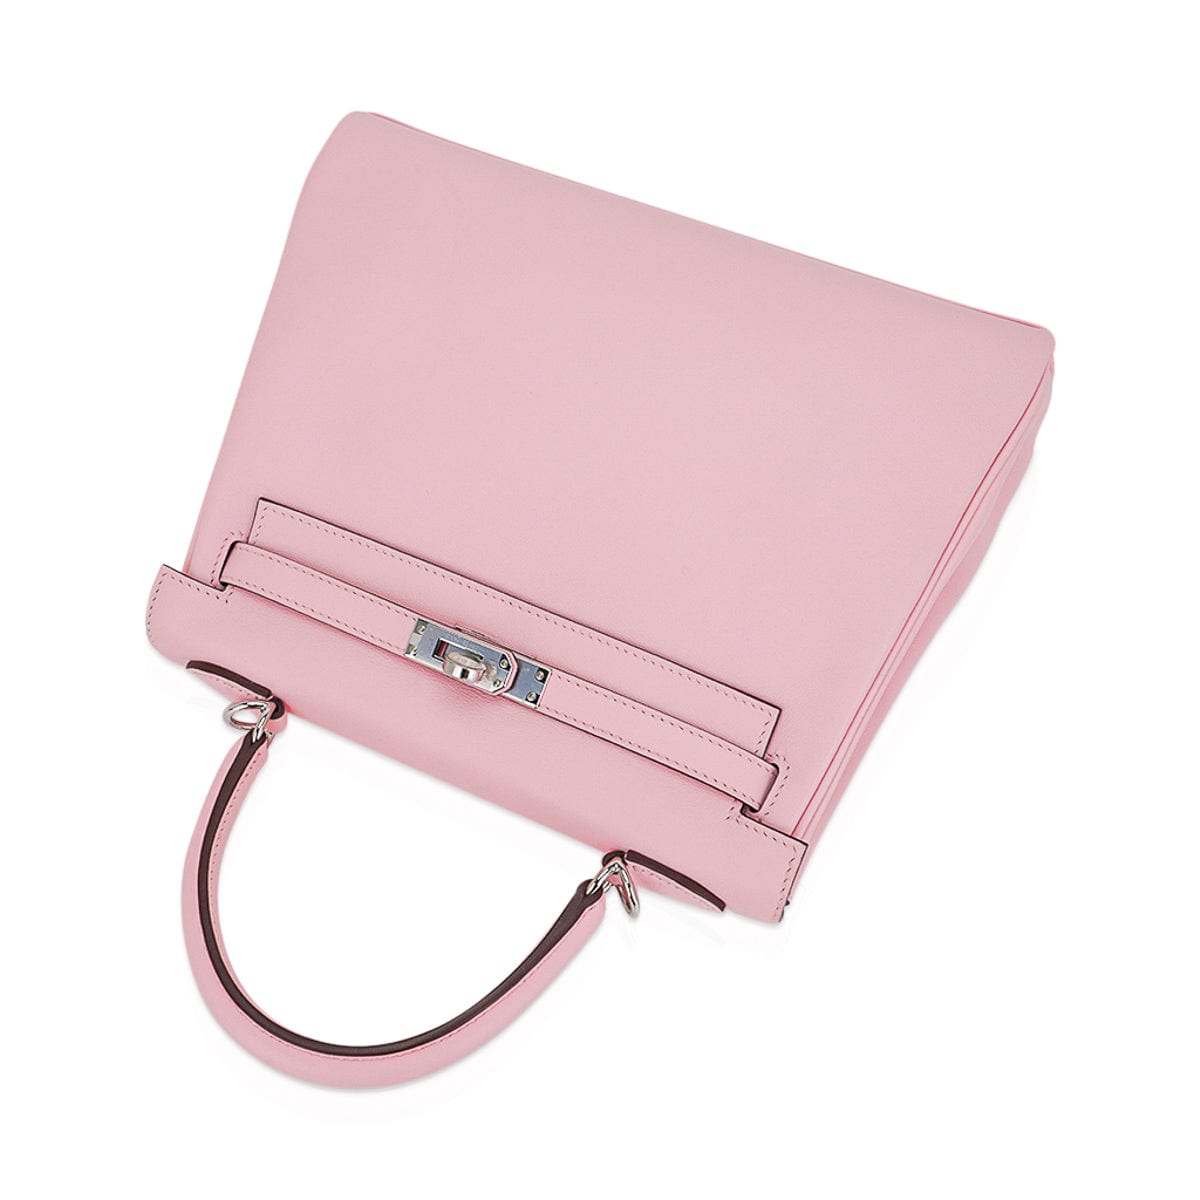 Hermes Kelly Handbag Pink Swift with Gold Hardware 25 Pink 12099837